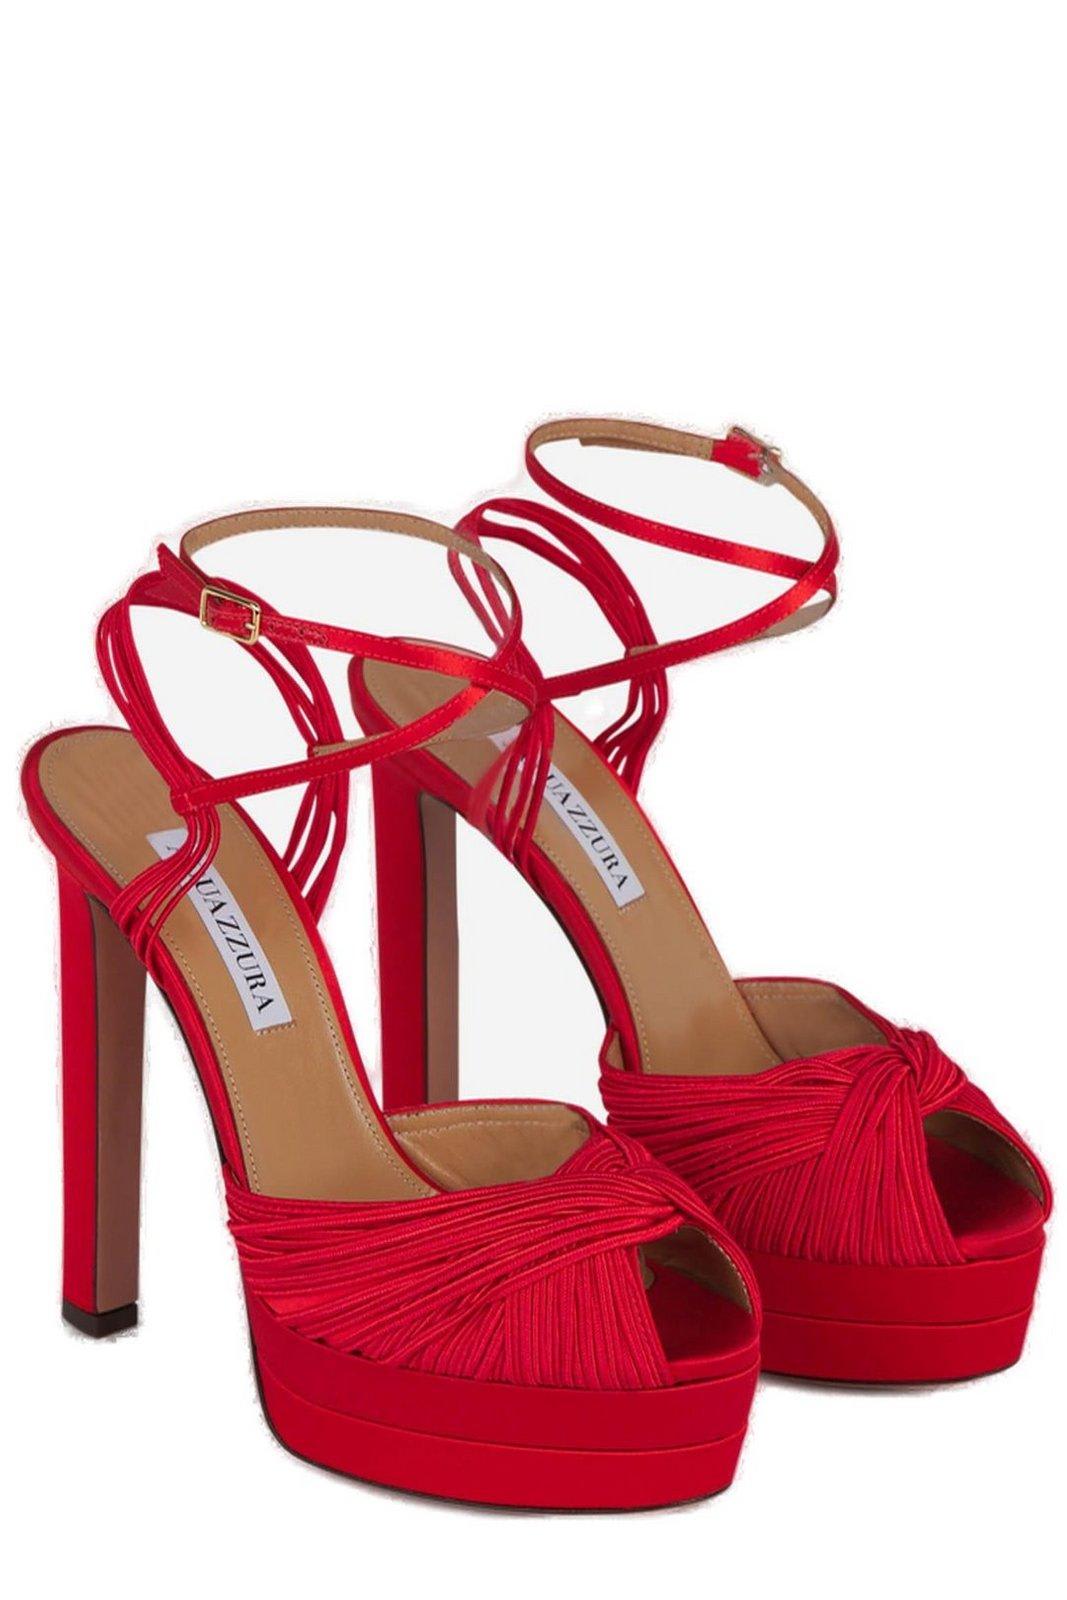 Shop Aquazzura Bellini Beauty Plateau Open Toe Sandals In Red